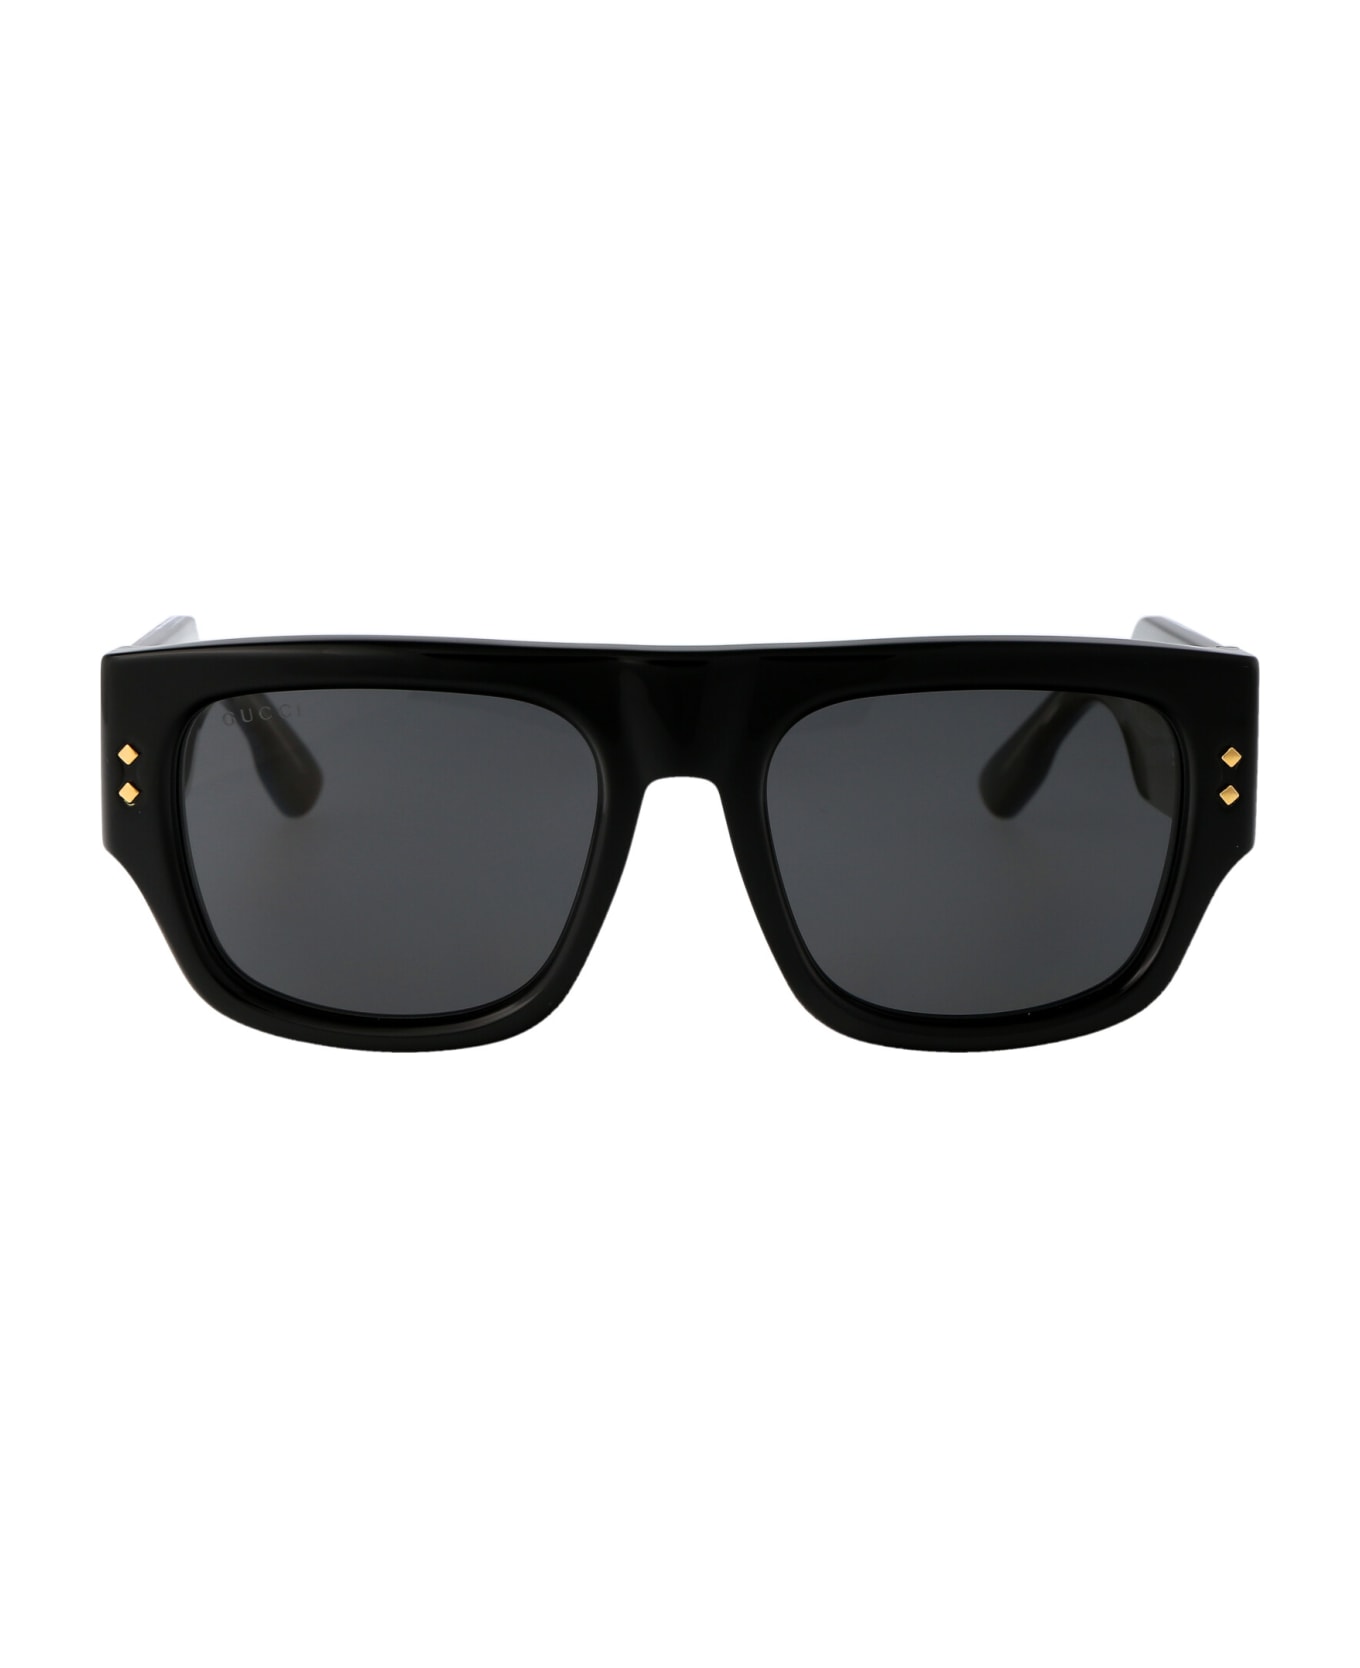 Gucci Eyewear Gg1262s Sunglasses - 001 BLACK BLACK GREY